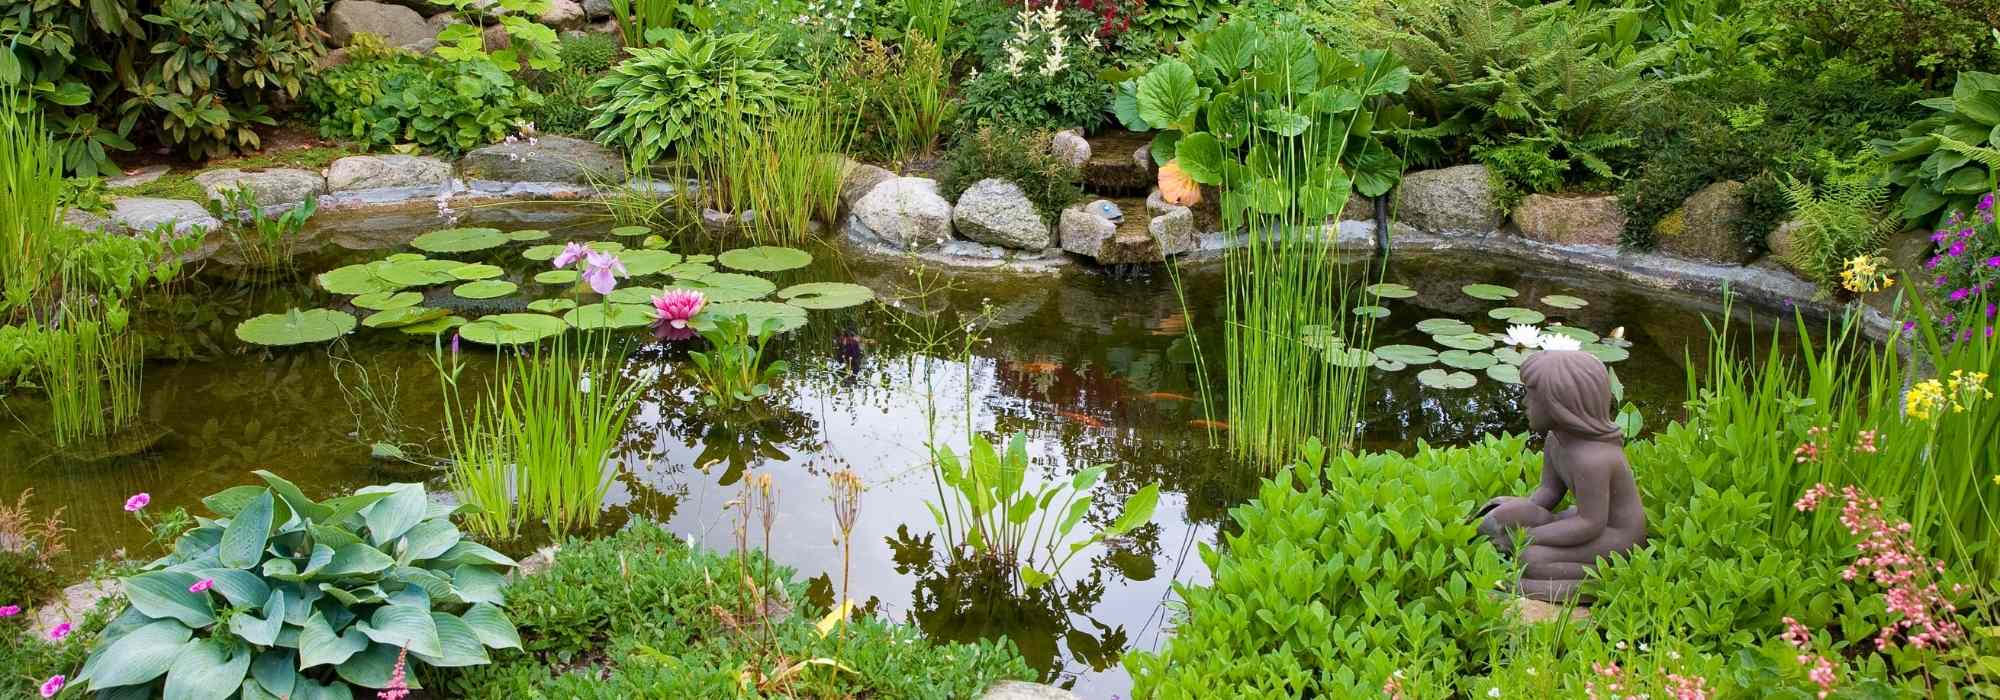 Bassin de jardin : installer, aménager et entretenir un bassin d'extérieur